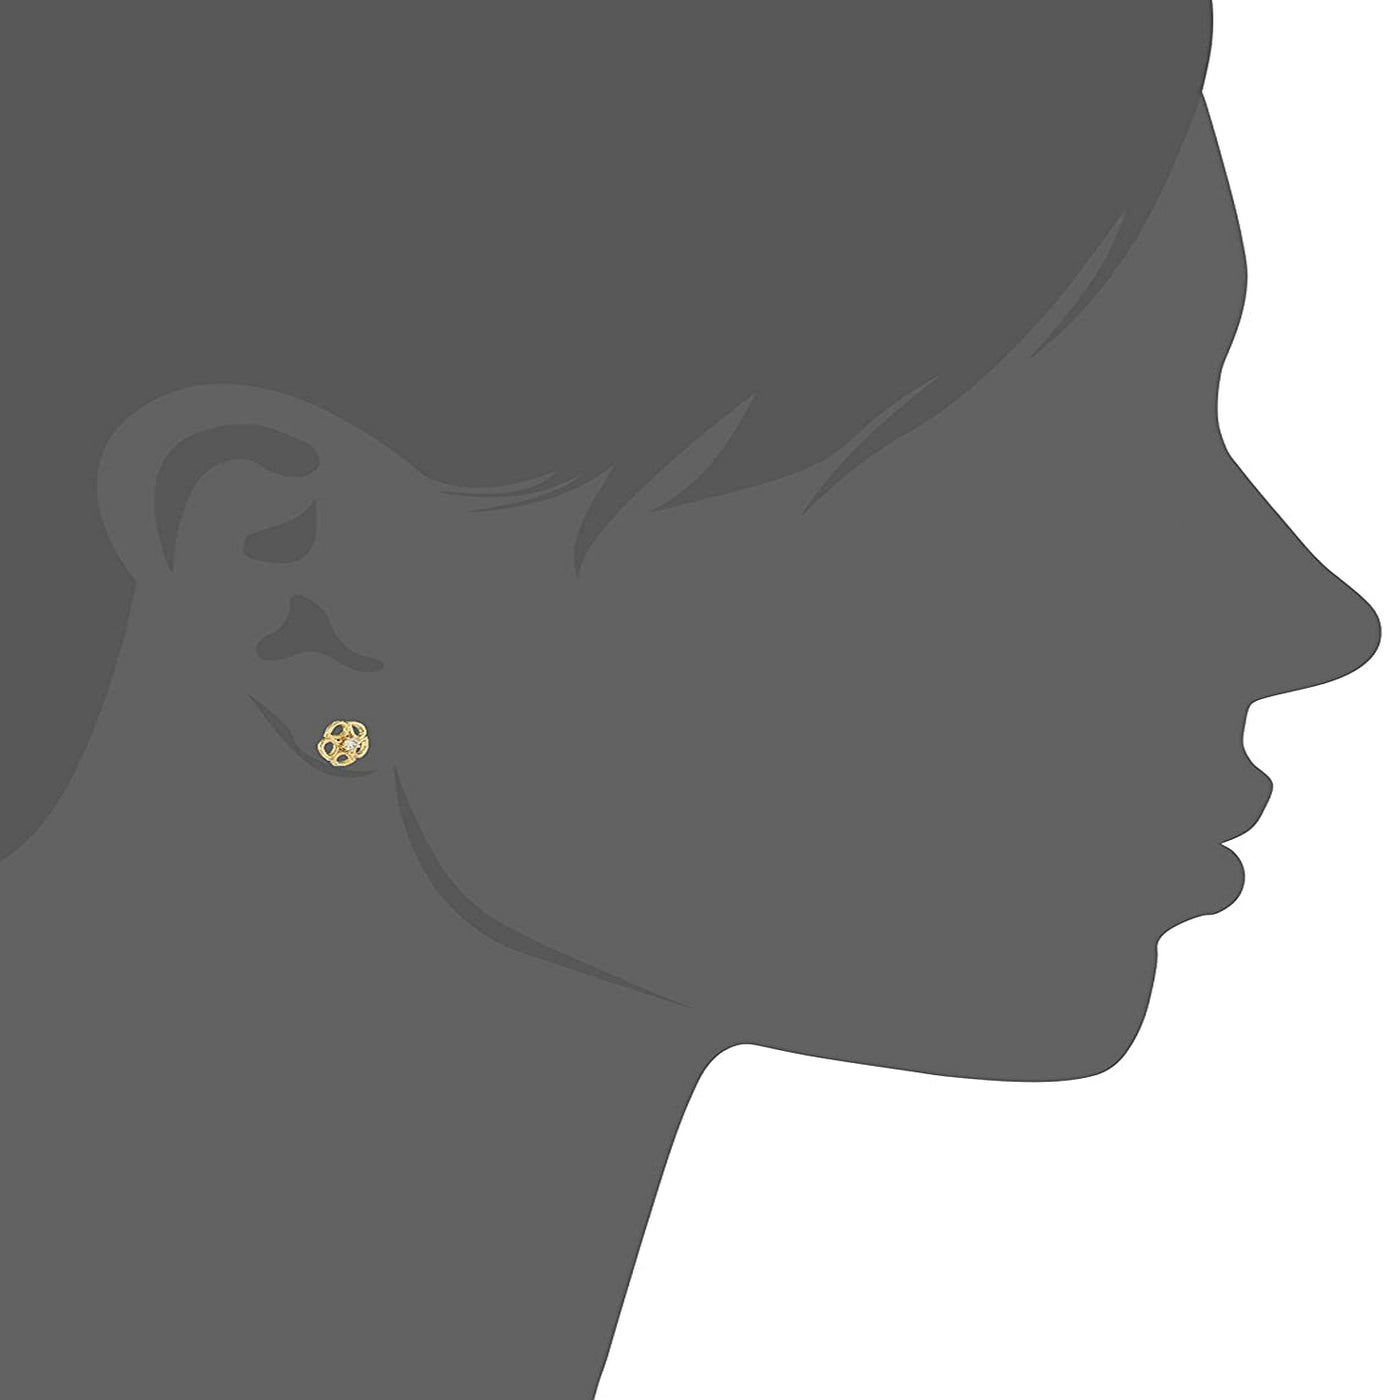 Estele Gold and Silver Plated American Diamond twirl Drop Earrings for women